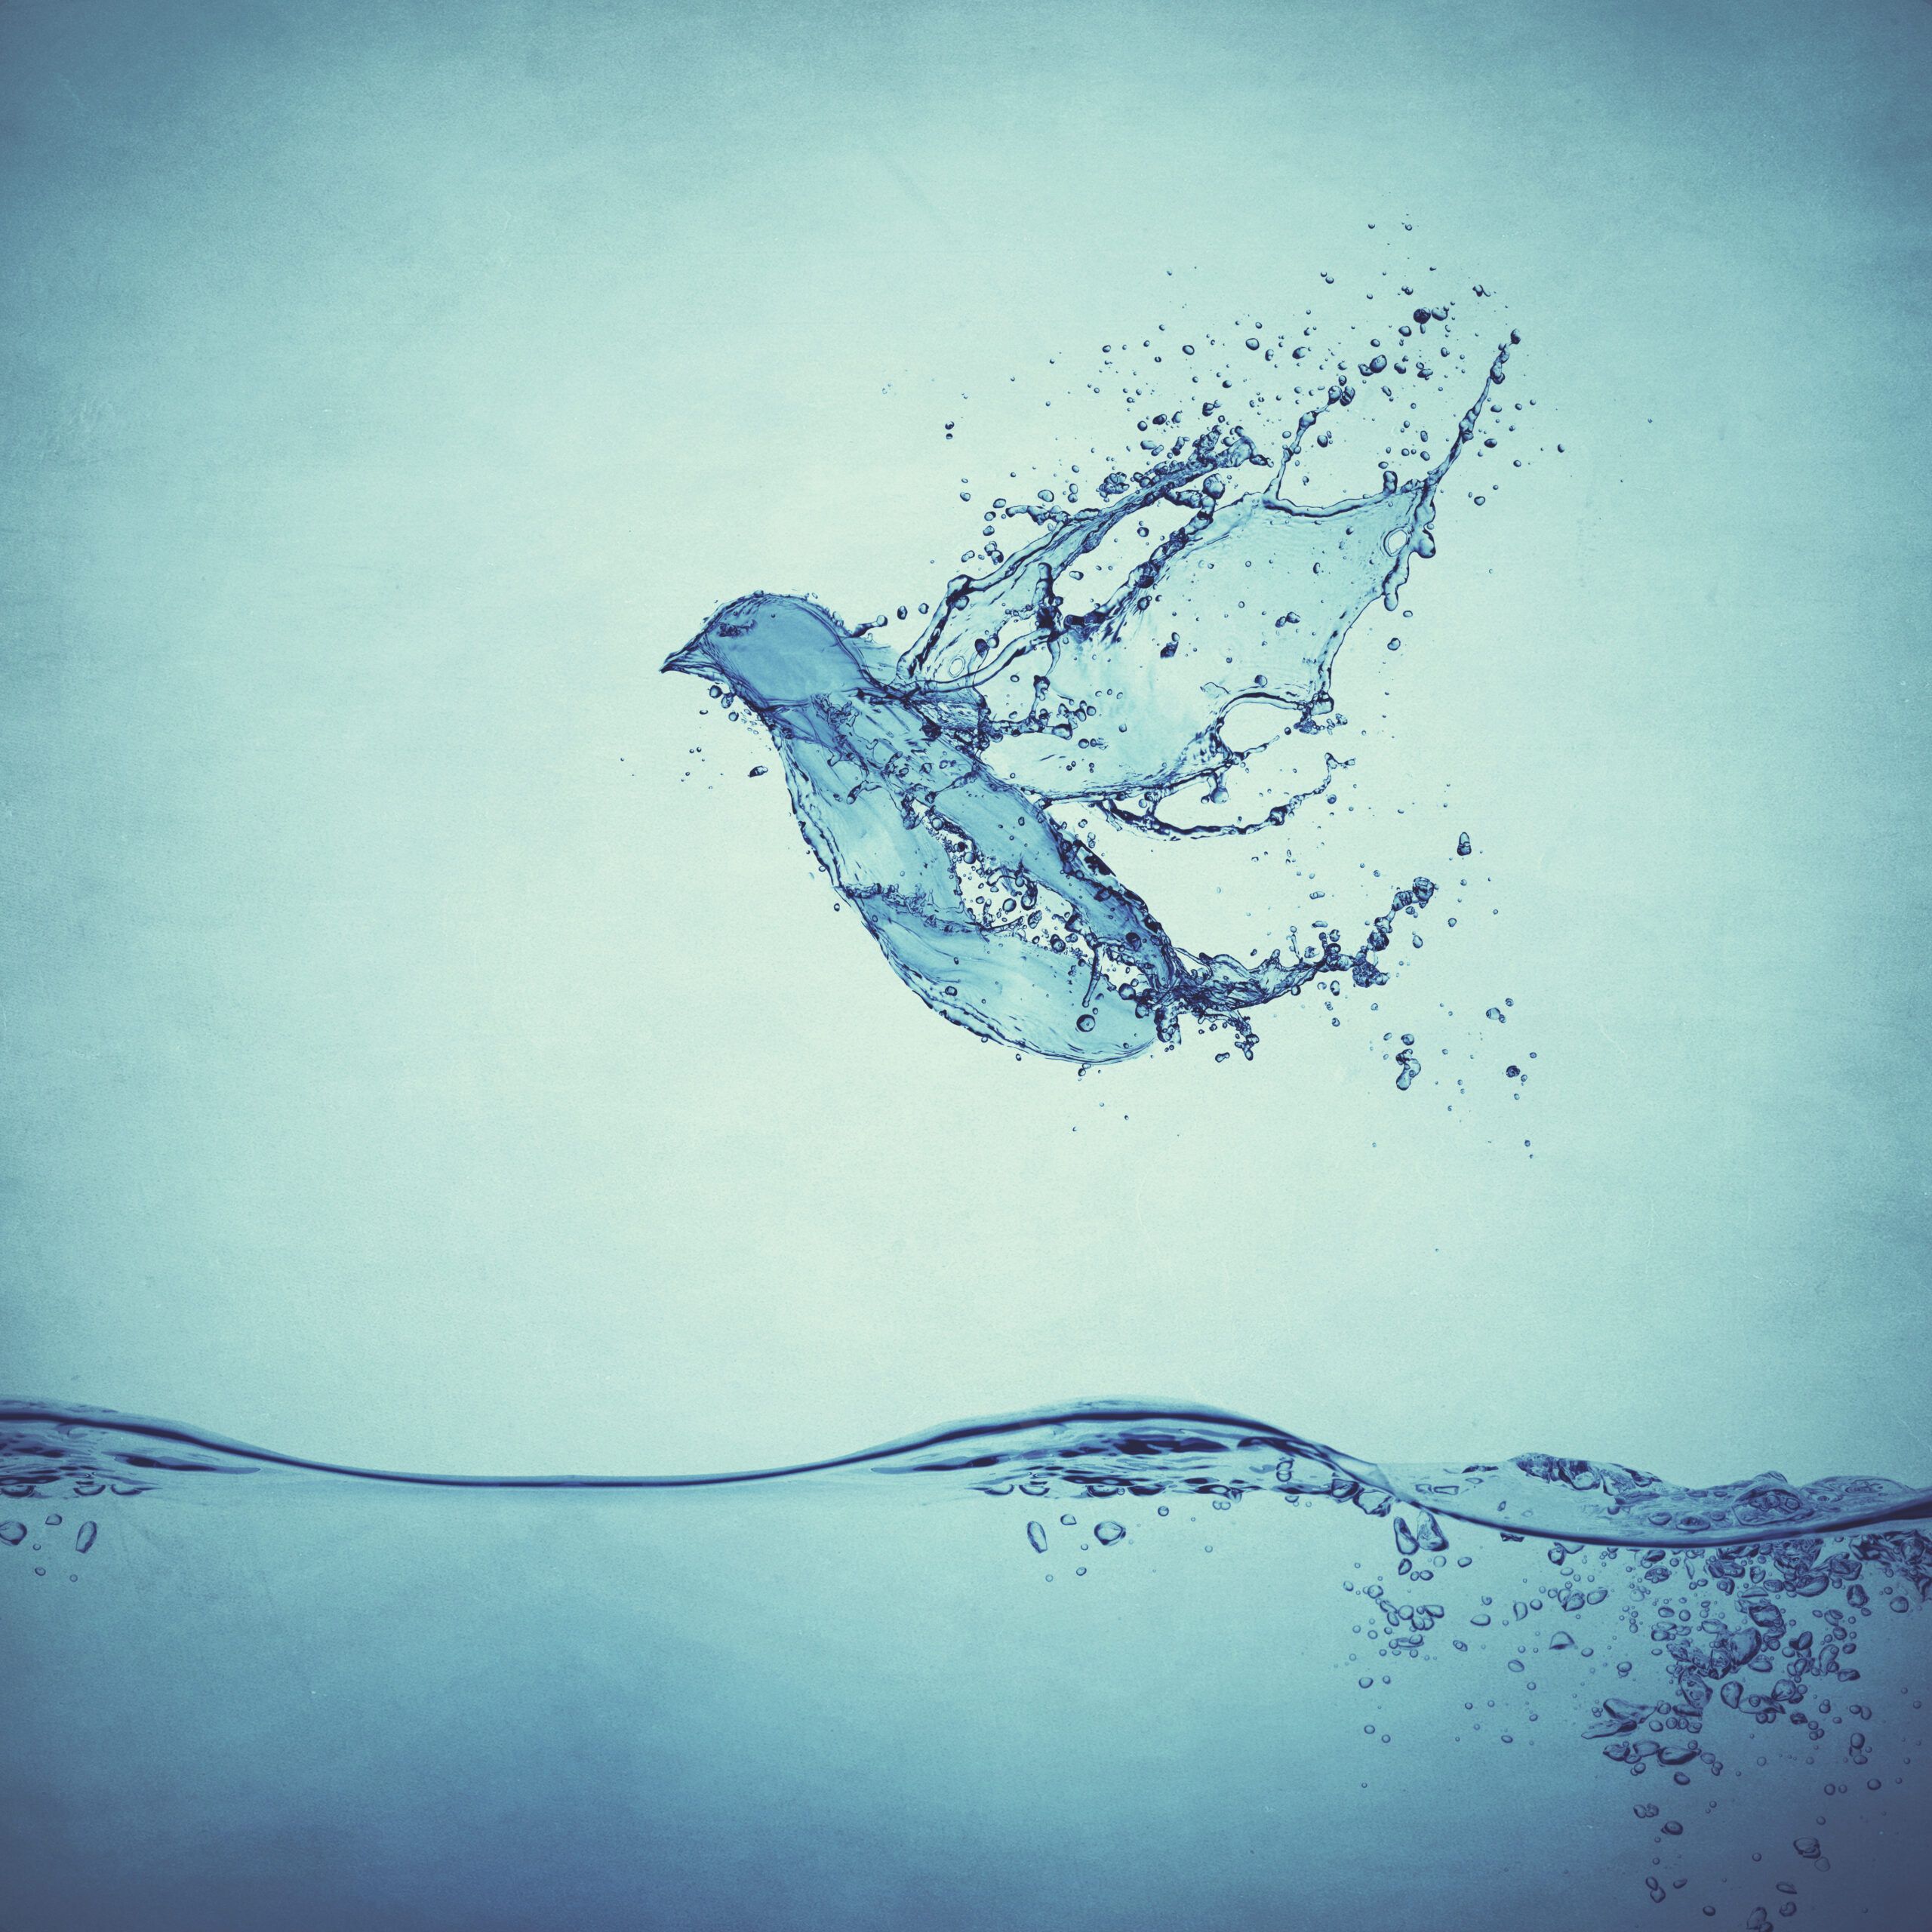 the holy spirit as a dove flies through the water BmvMTAZlR scaled